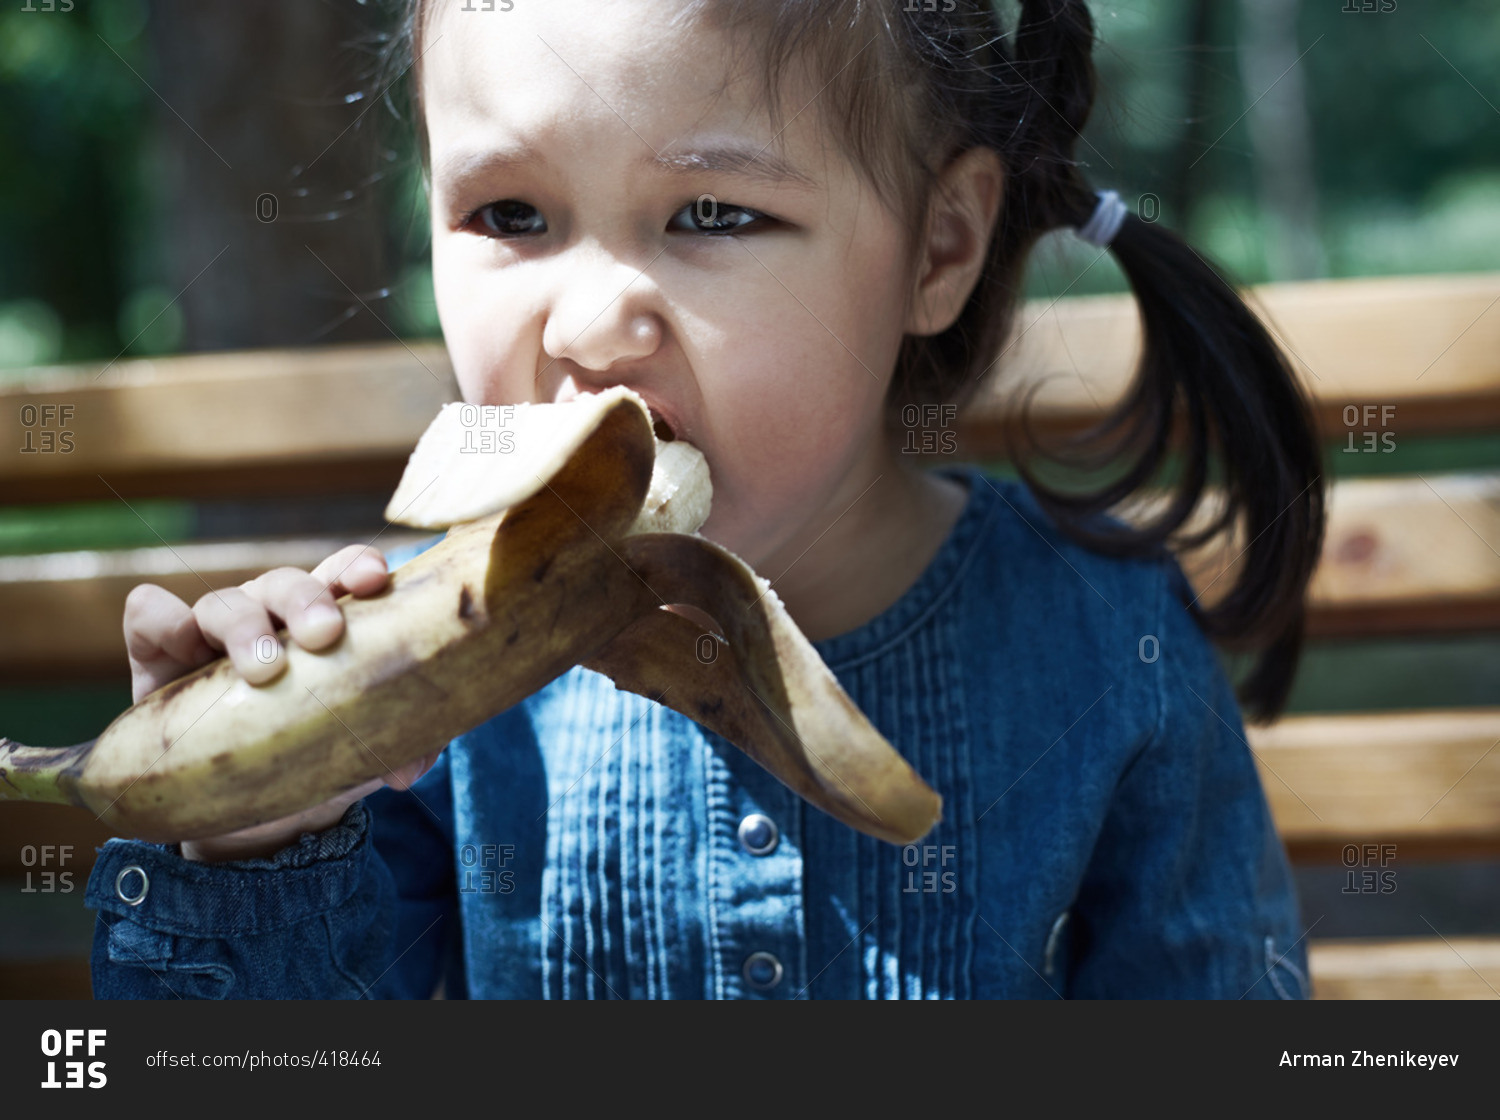 Girl eating a banana outdoors